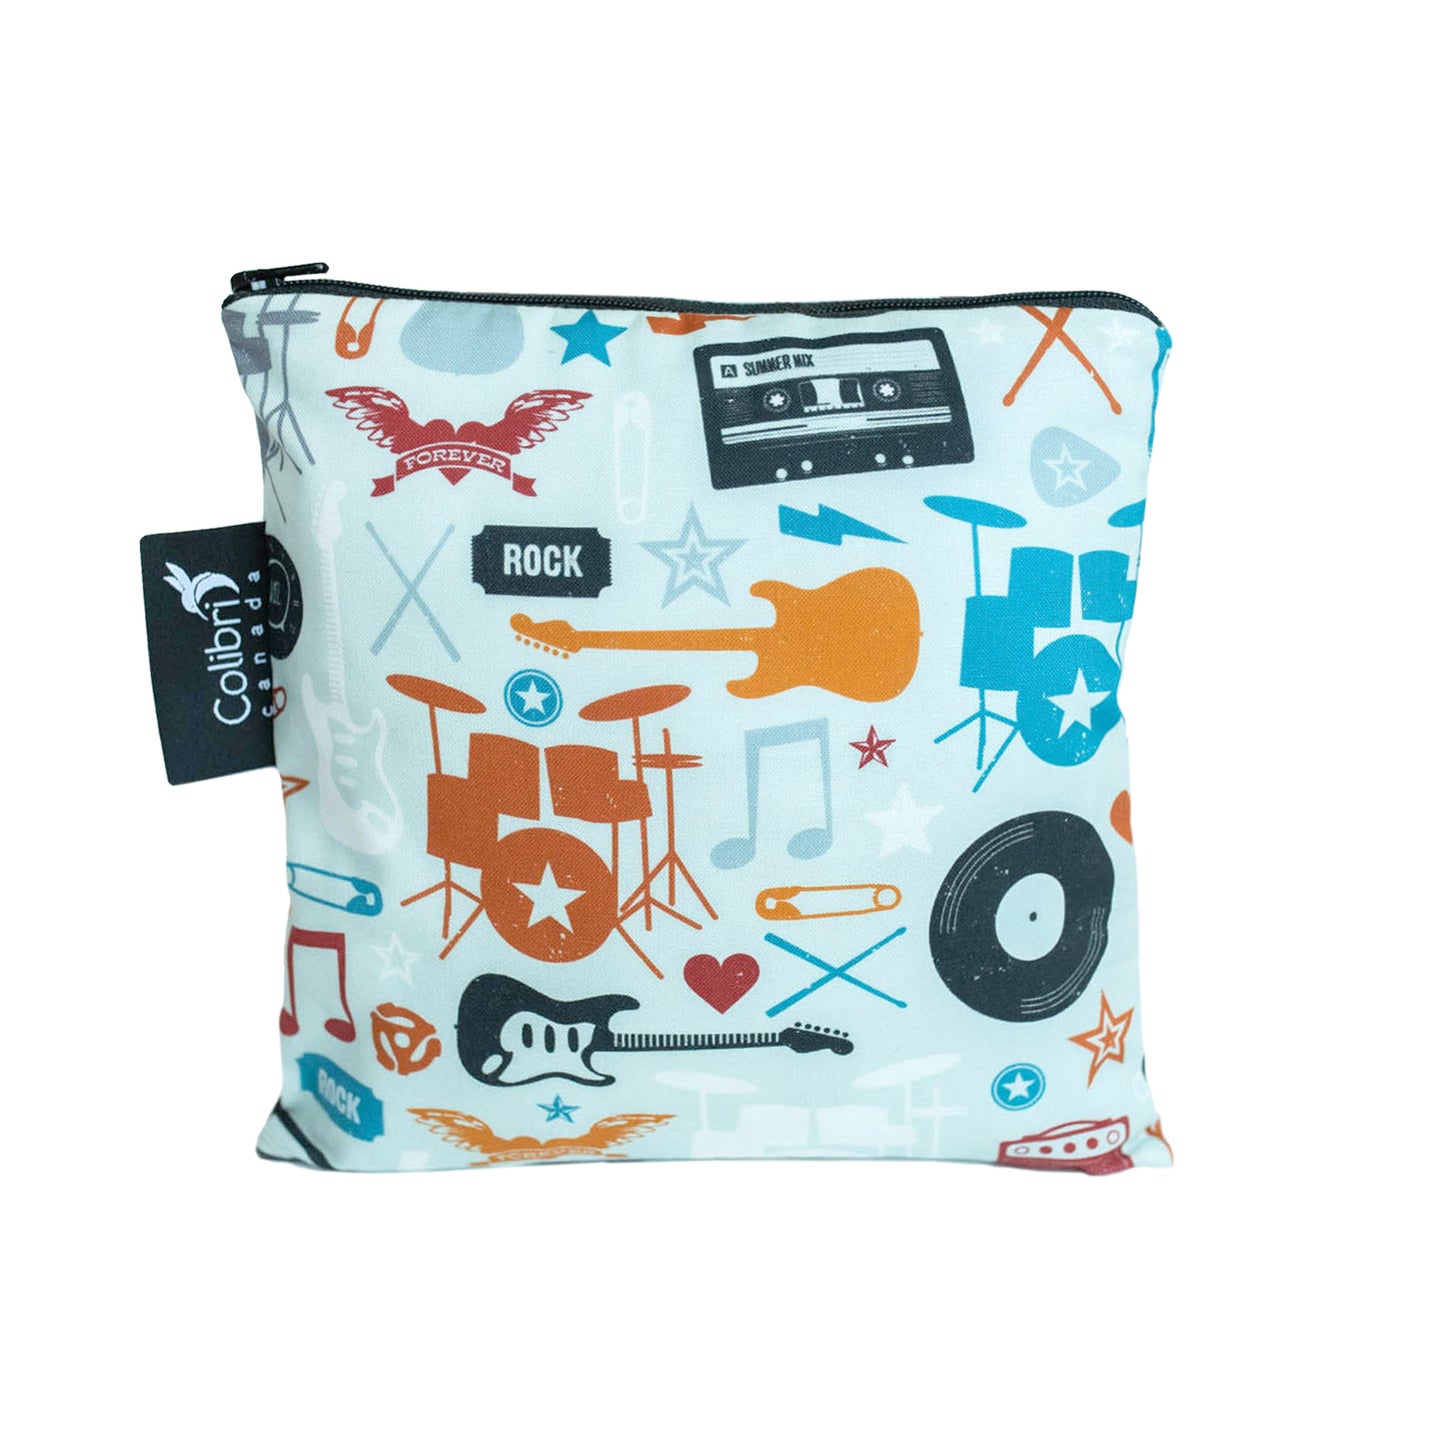 2119 - Rock n' Roll Reusable Snack Bag - Large